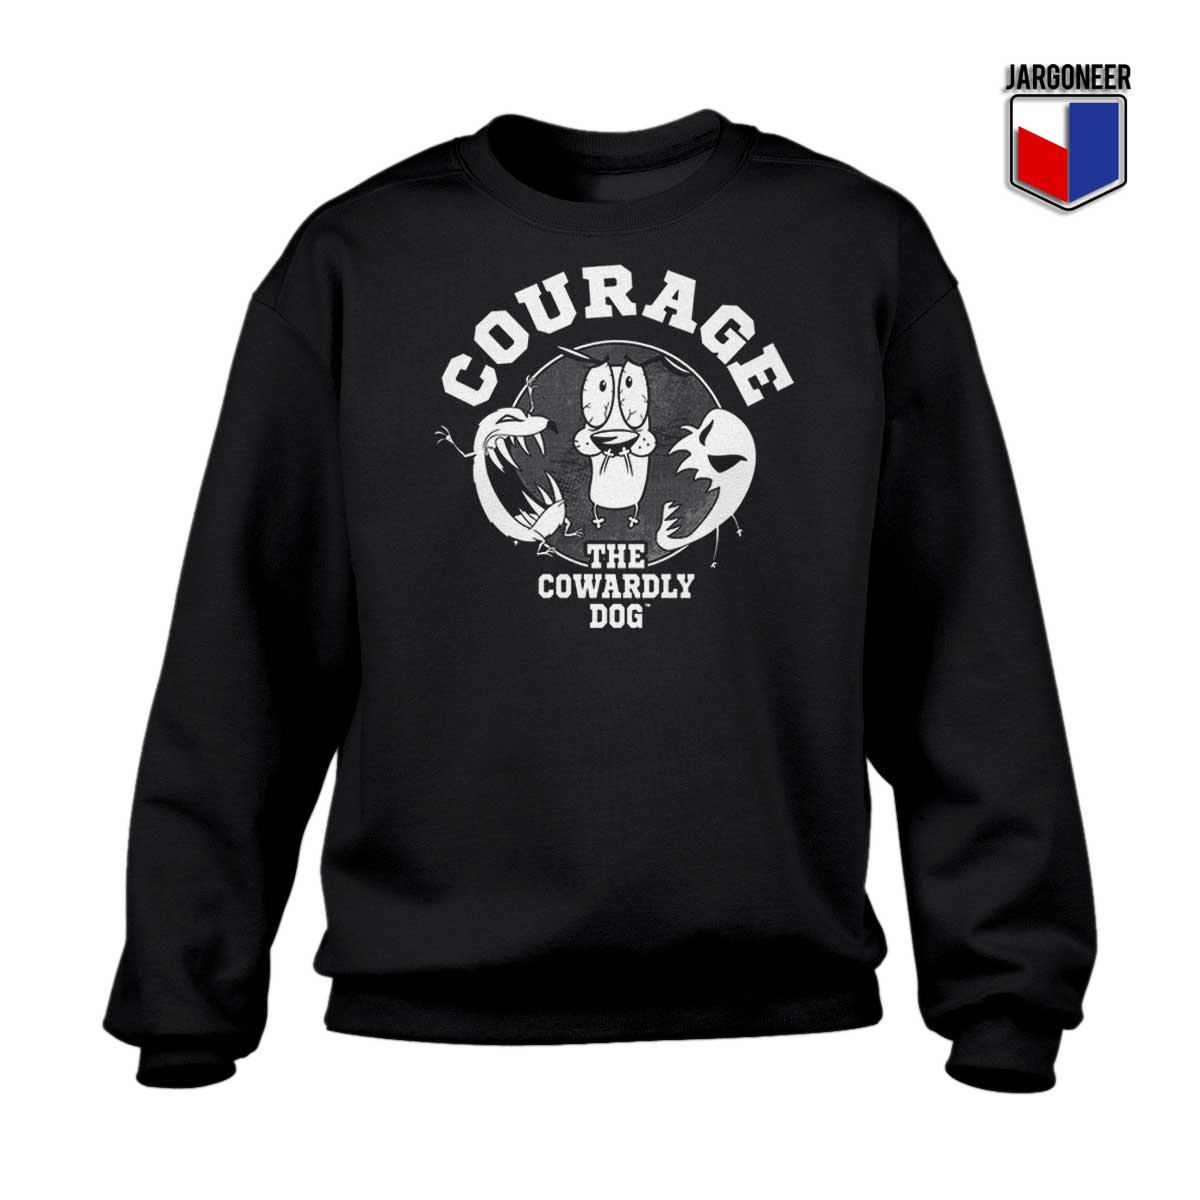 Courage and Company Sweatshirt - Shop Unique Graphic Cool Shirt Designs